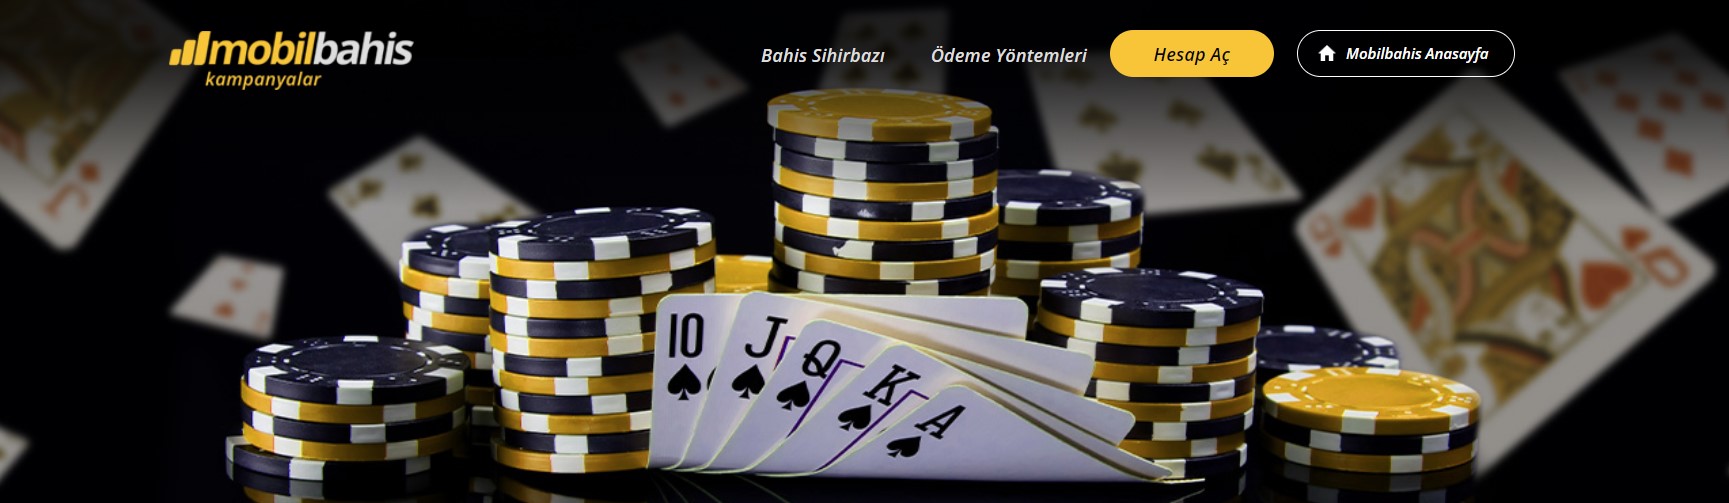 Mobilbahis802 Canlı Poker